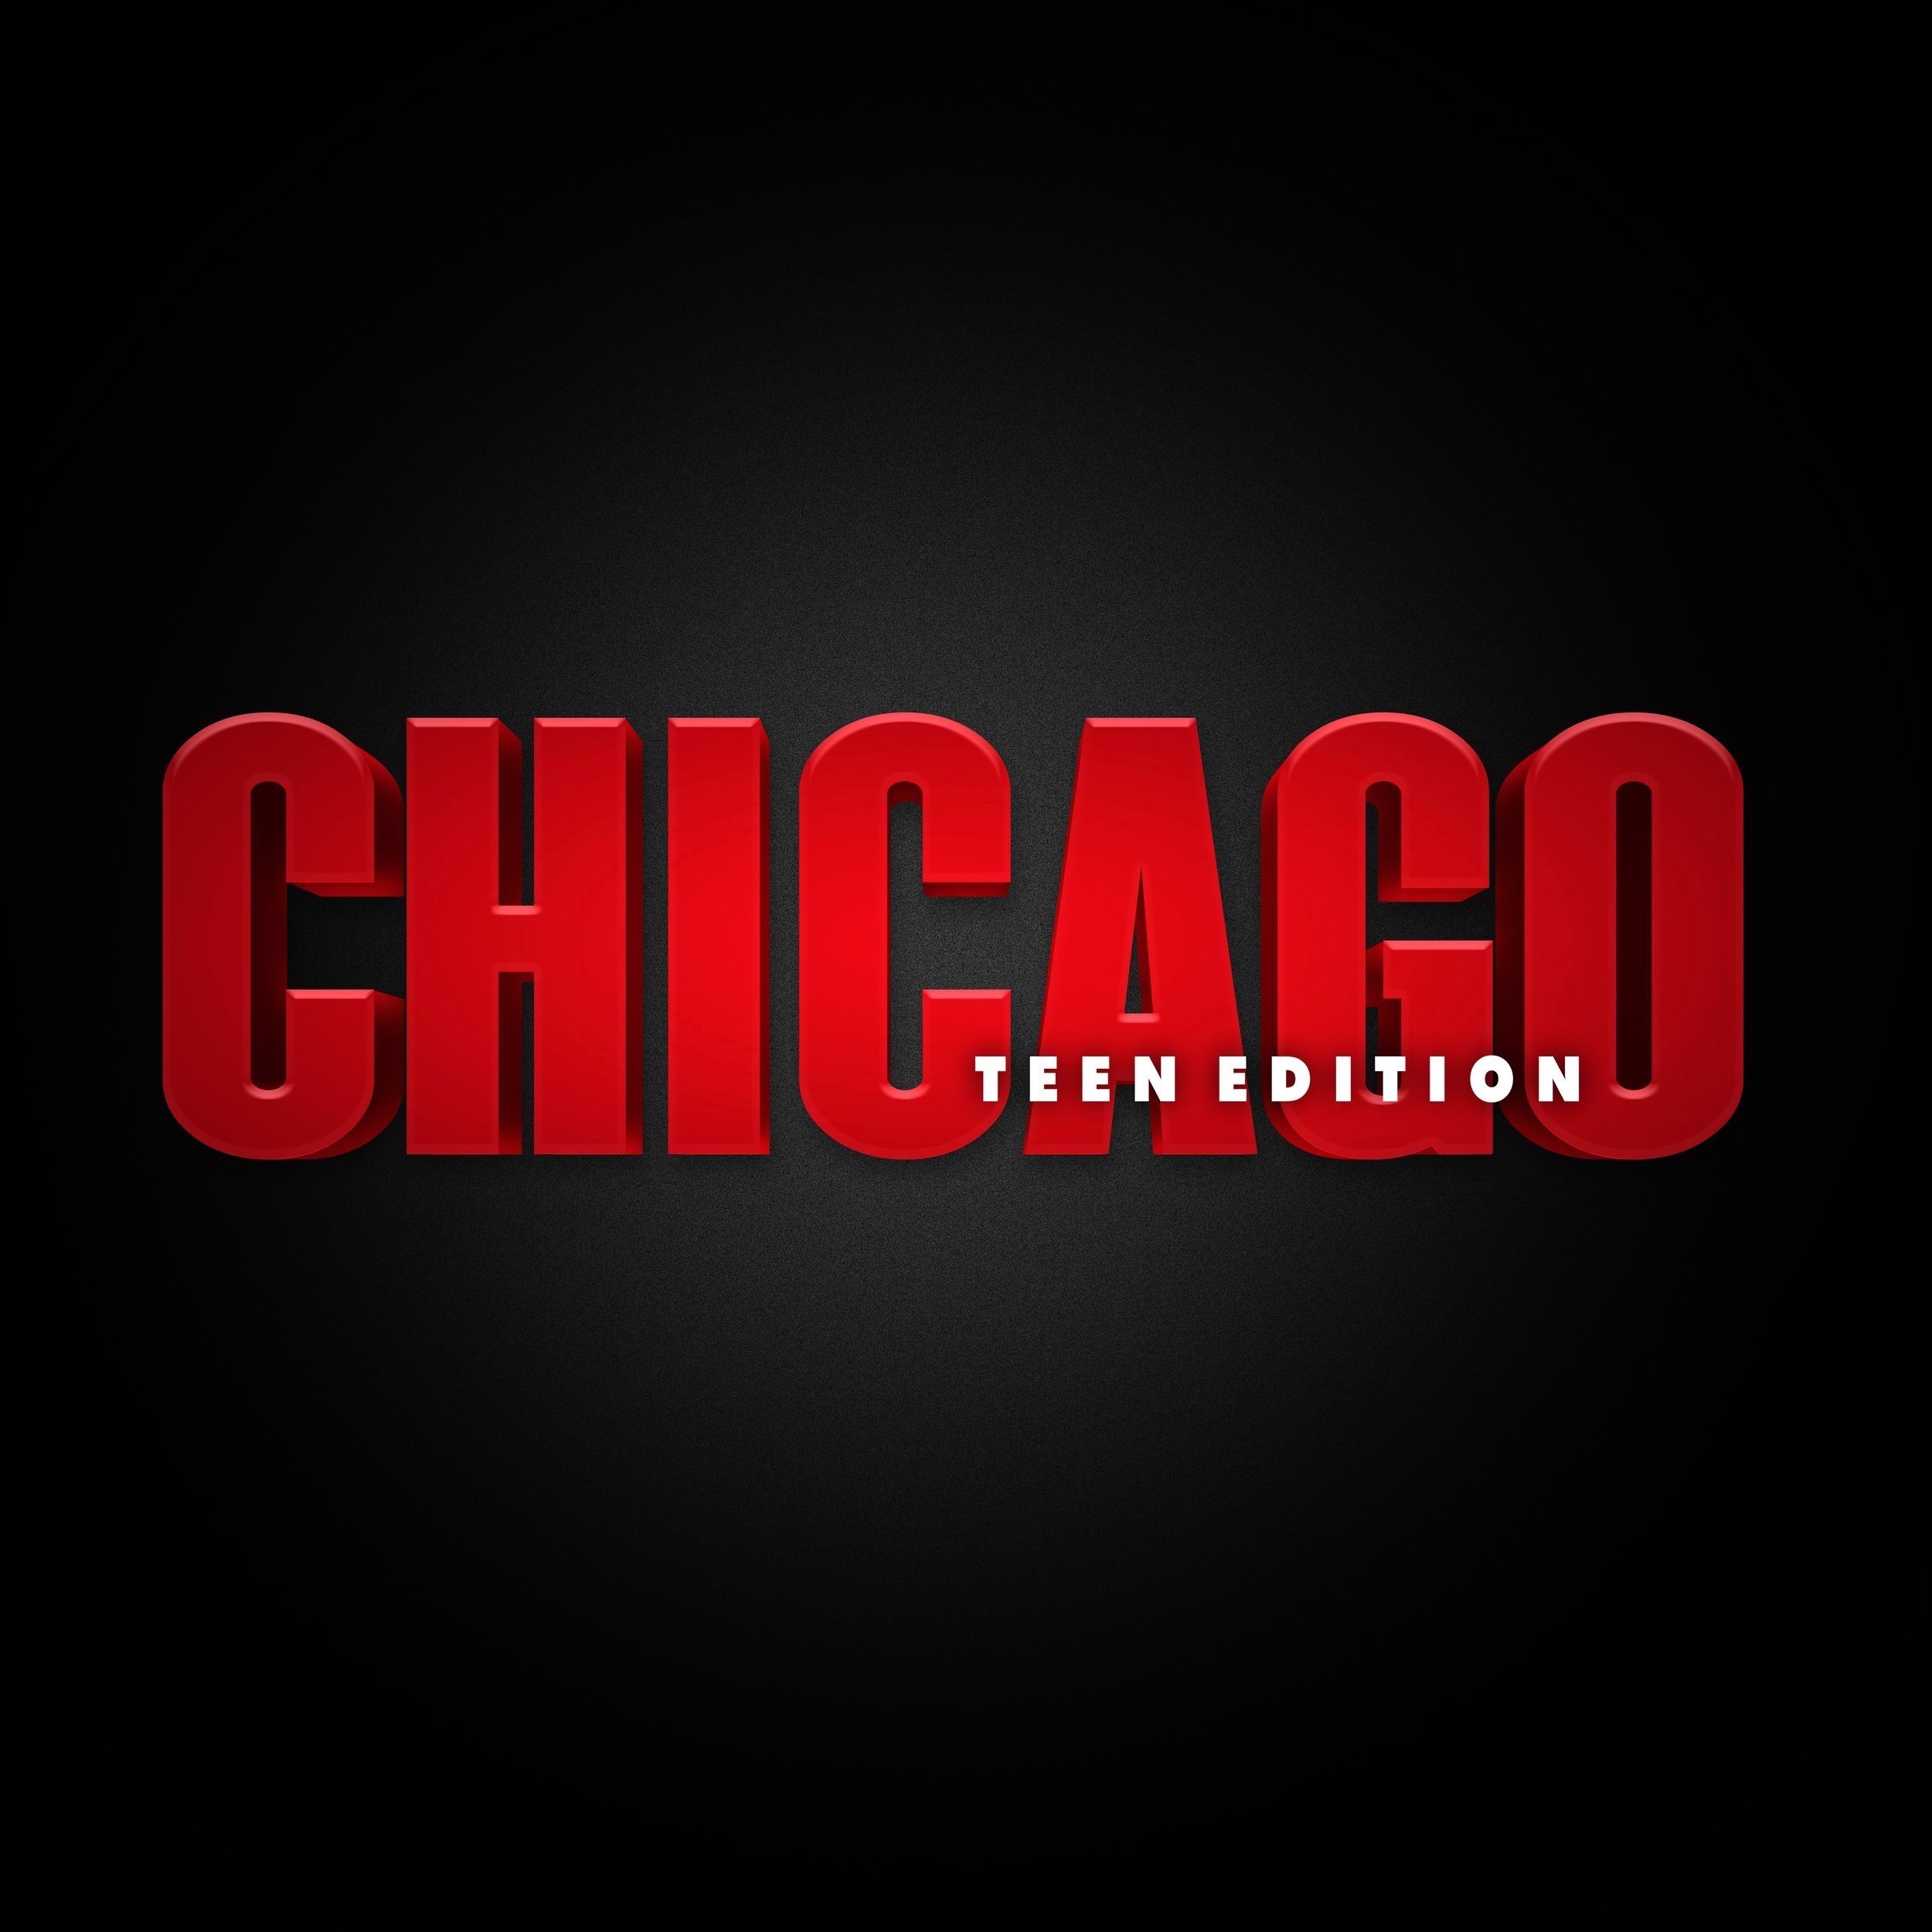 Chicago: Teen Edition